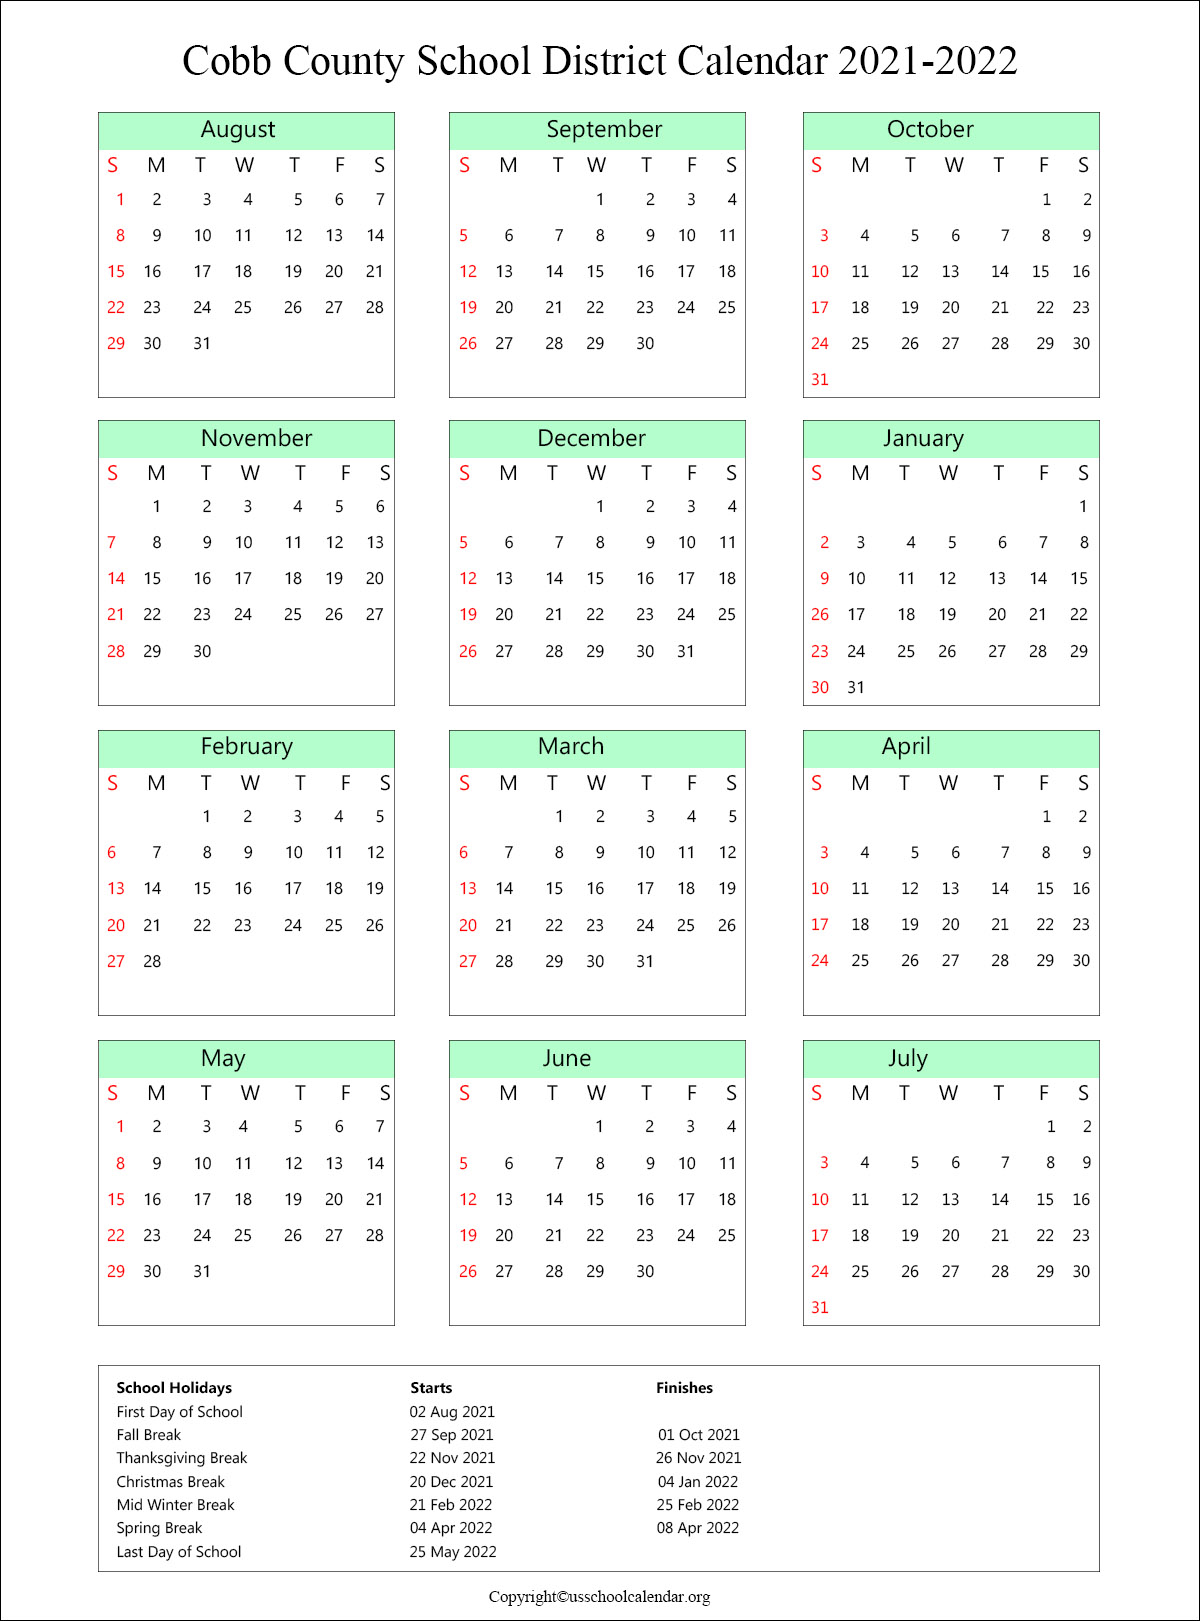 Cobb County Calendar 2022 Cobb County School Calendar With Holidays 2021-2022